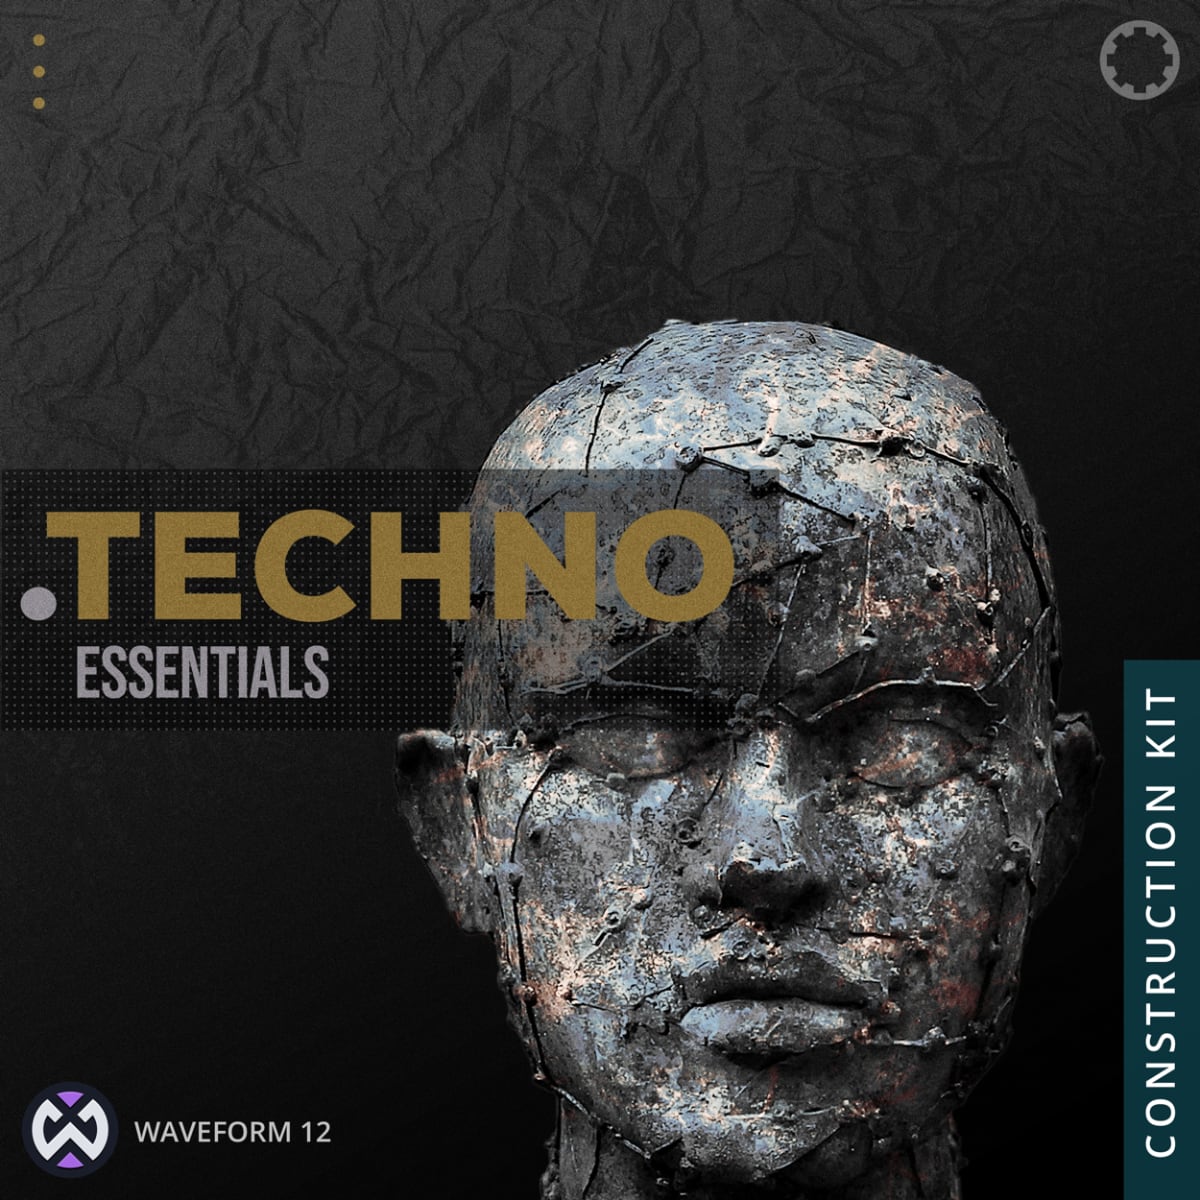 techno essentials album cover